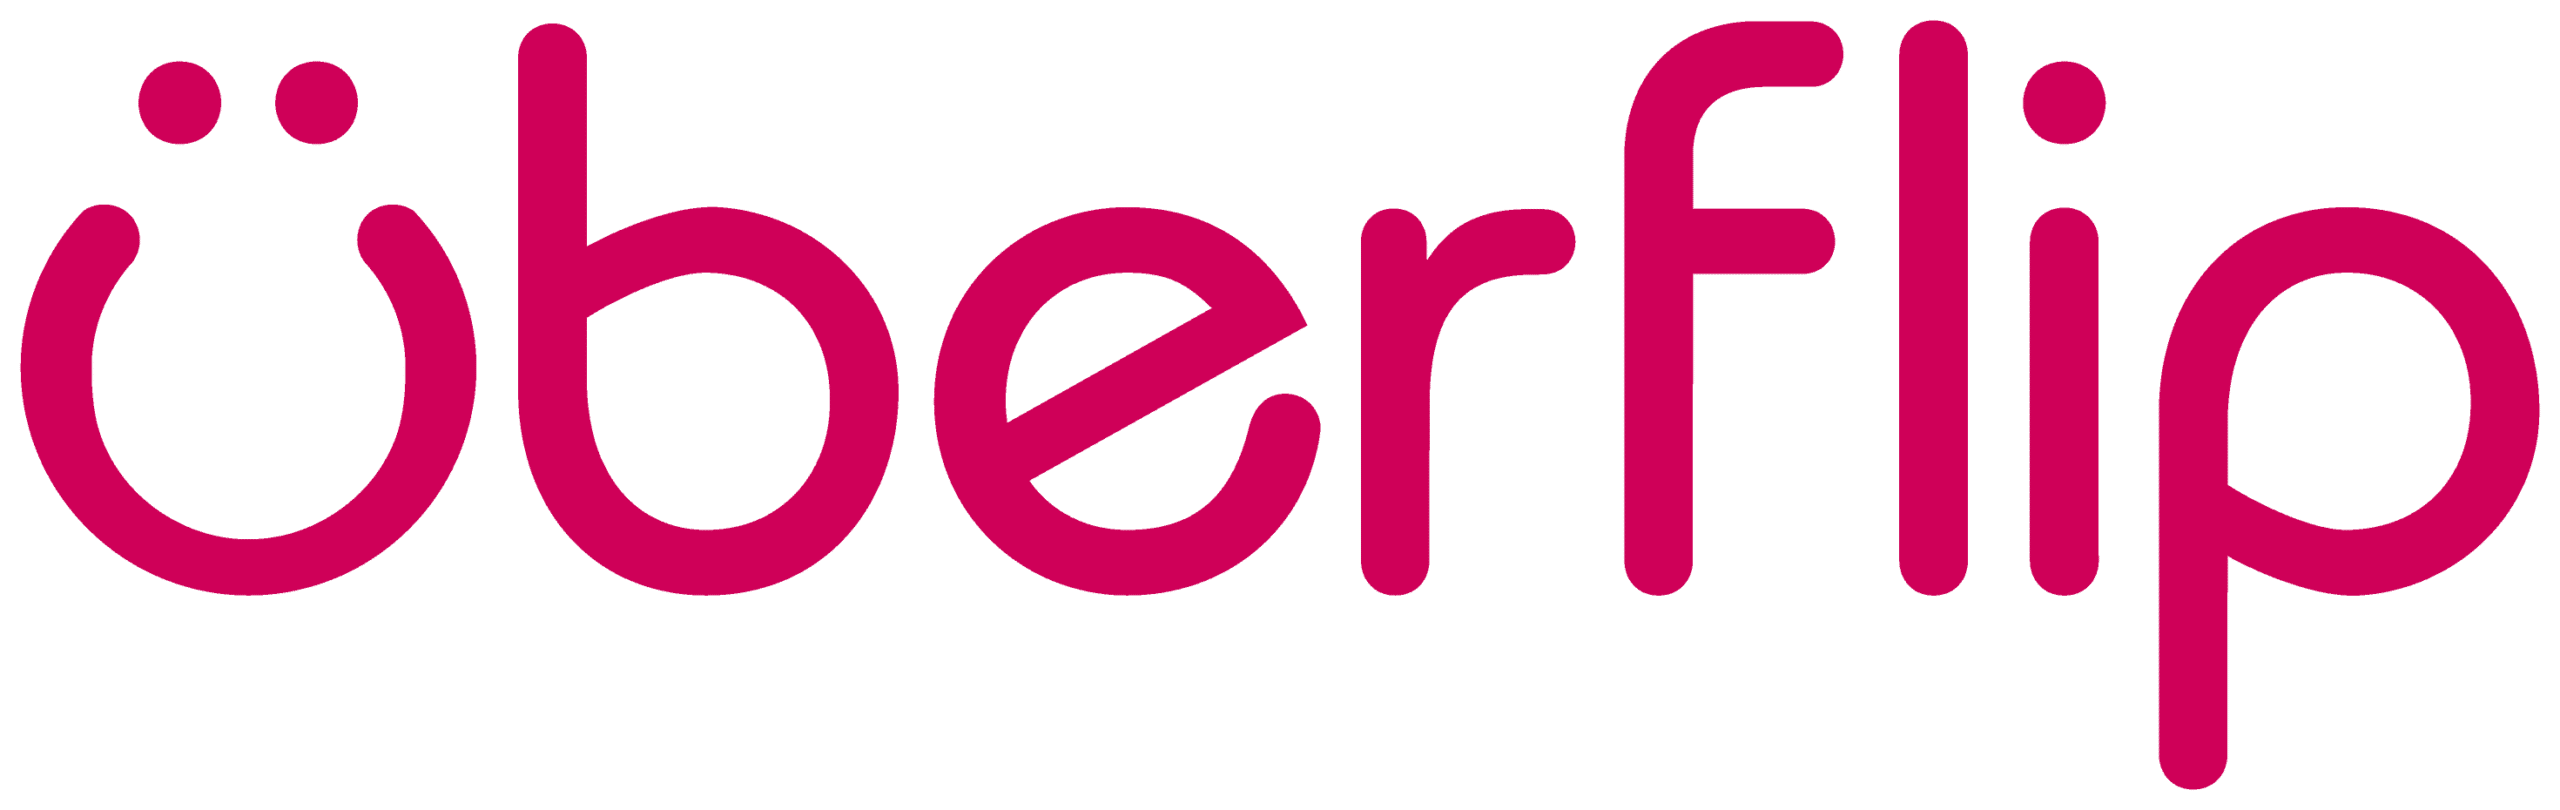 Uberflip logo